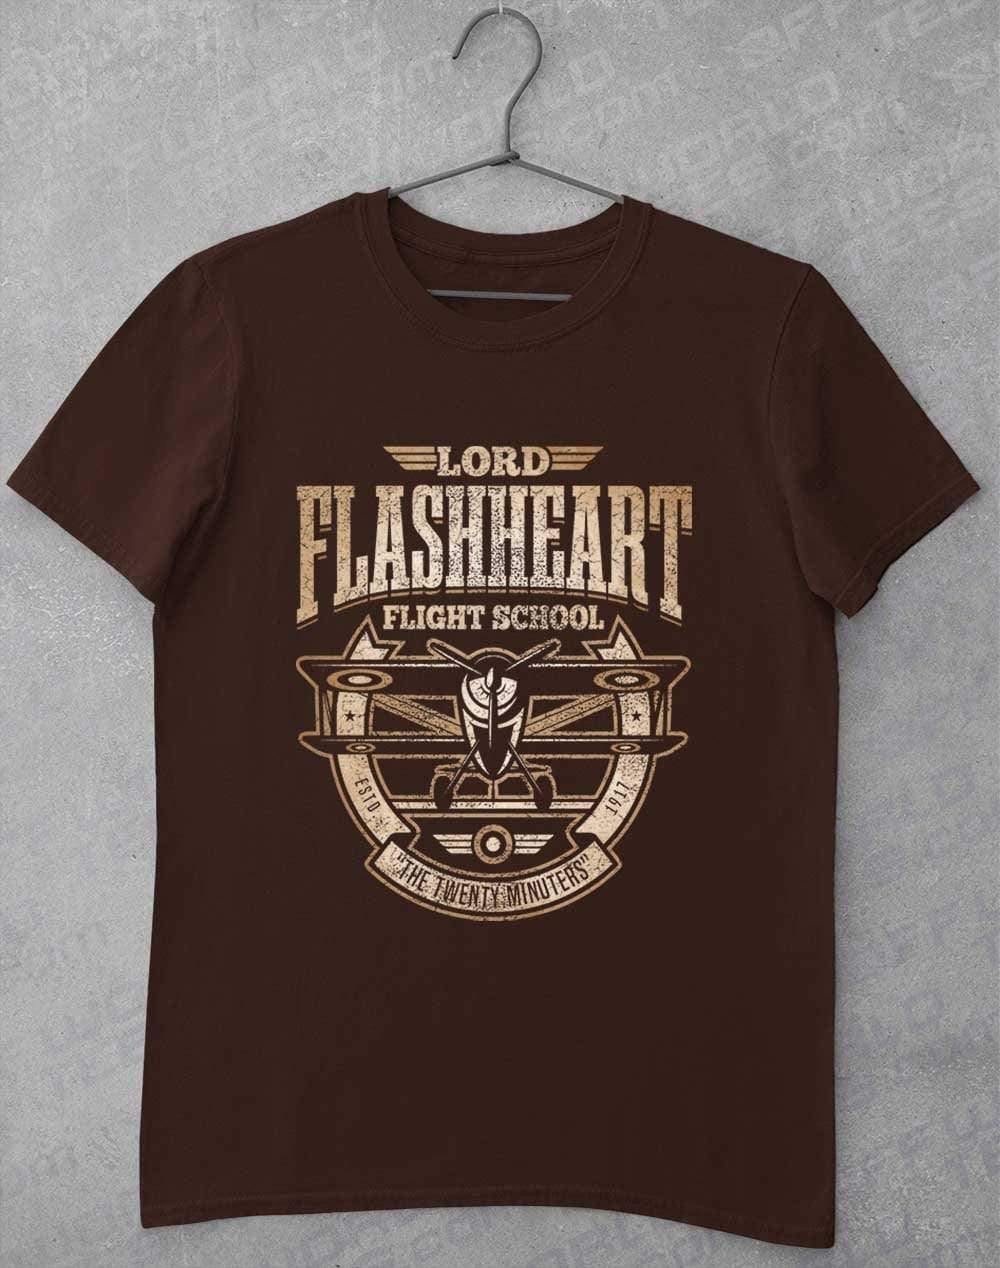 Flashheart's Flight School T-Shirt S / Dark Chocolate  - Off World Tees